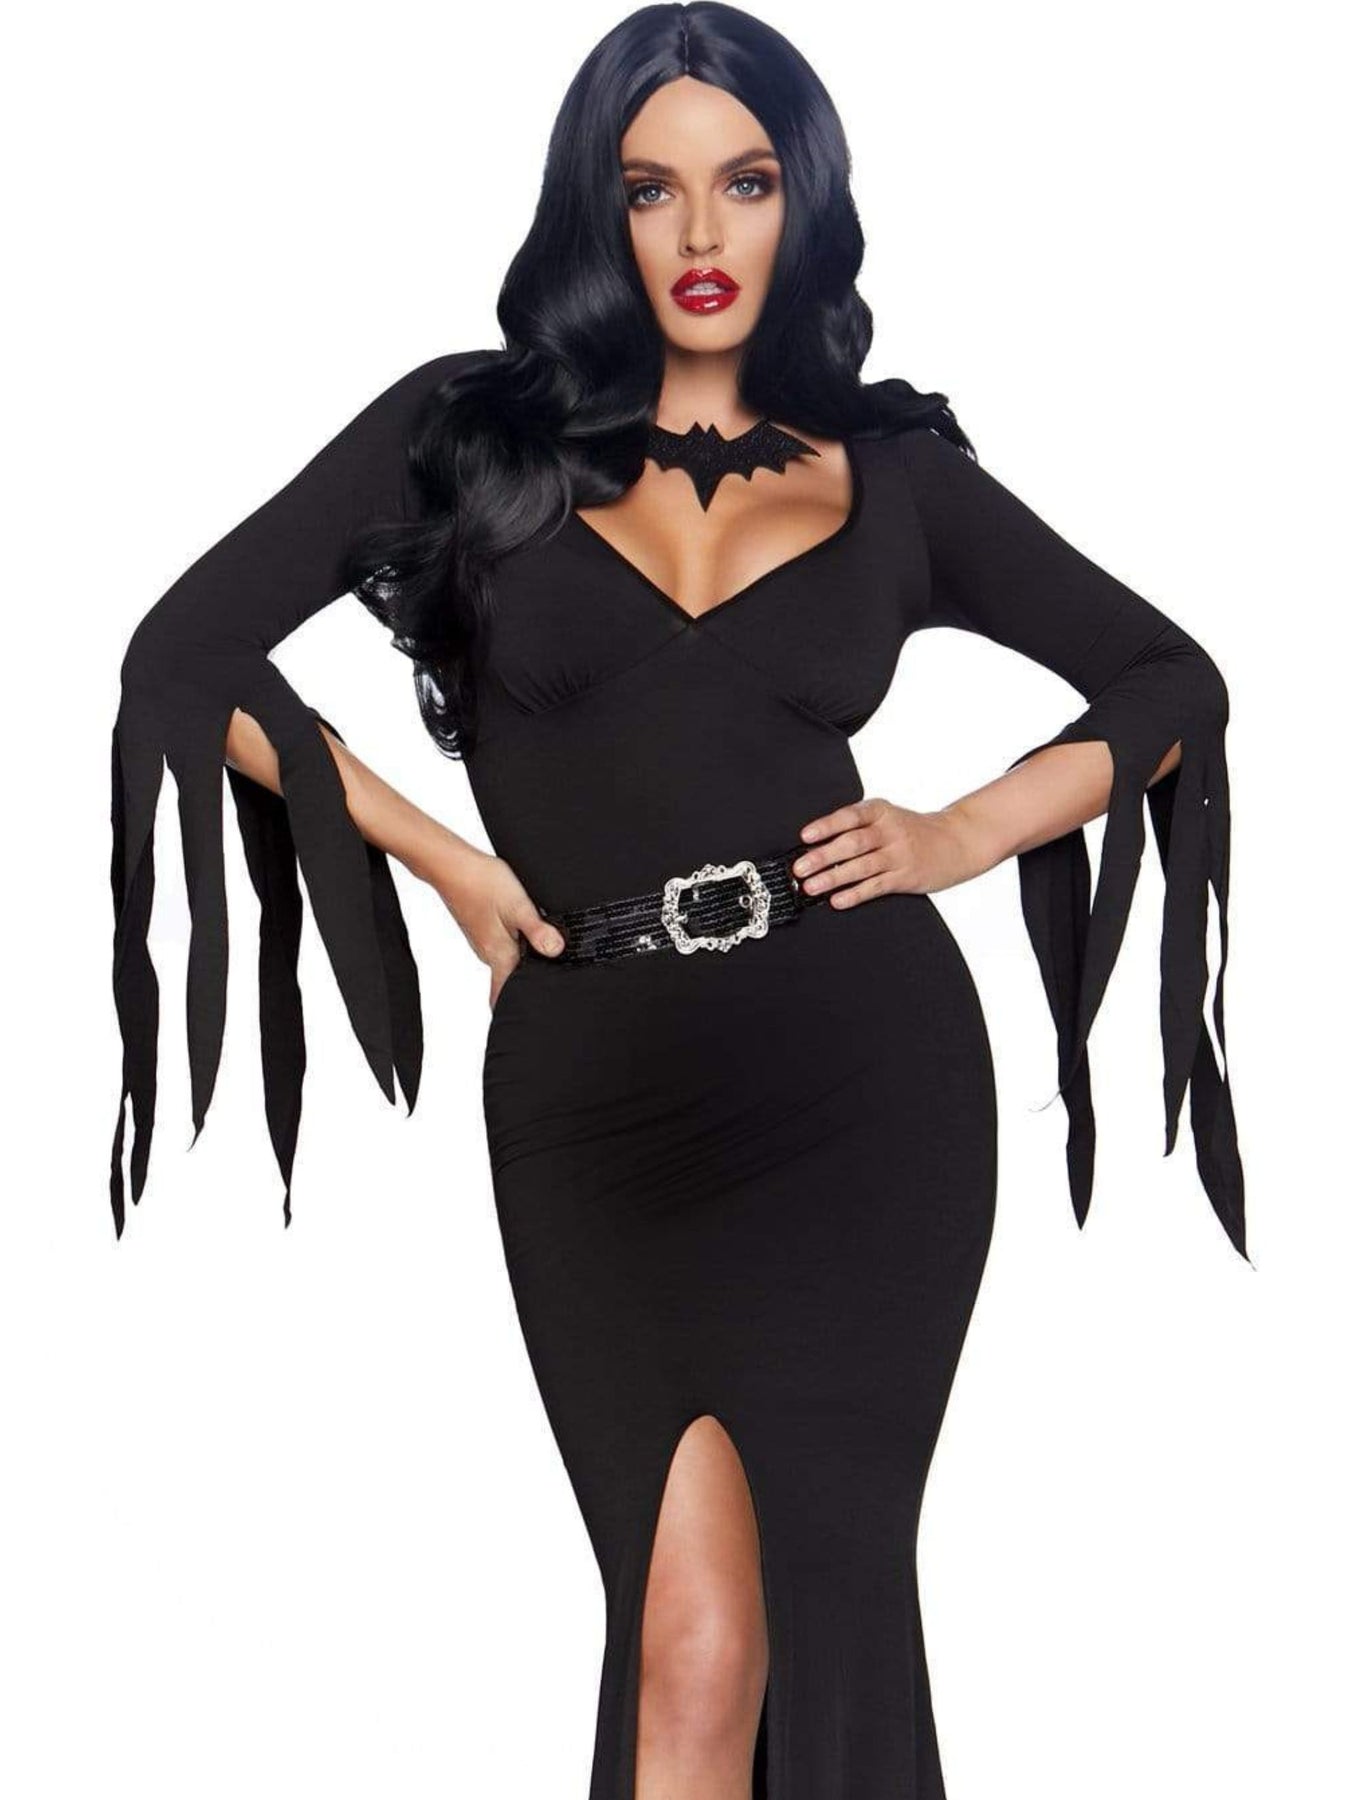 Immoral Mistress Elvira Gothic Halloween Costume|Shop Fortune Costumes